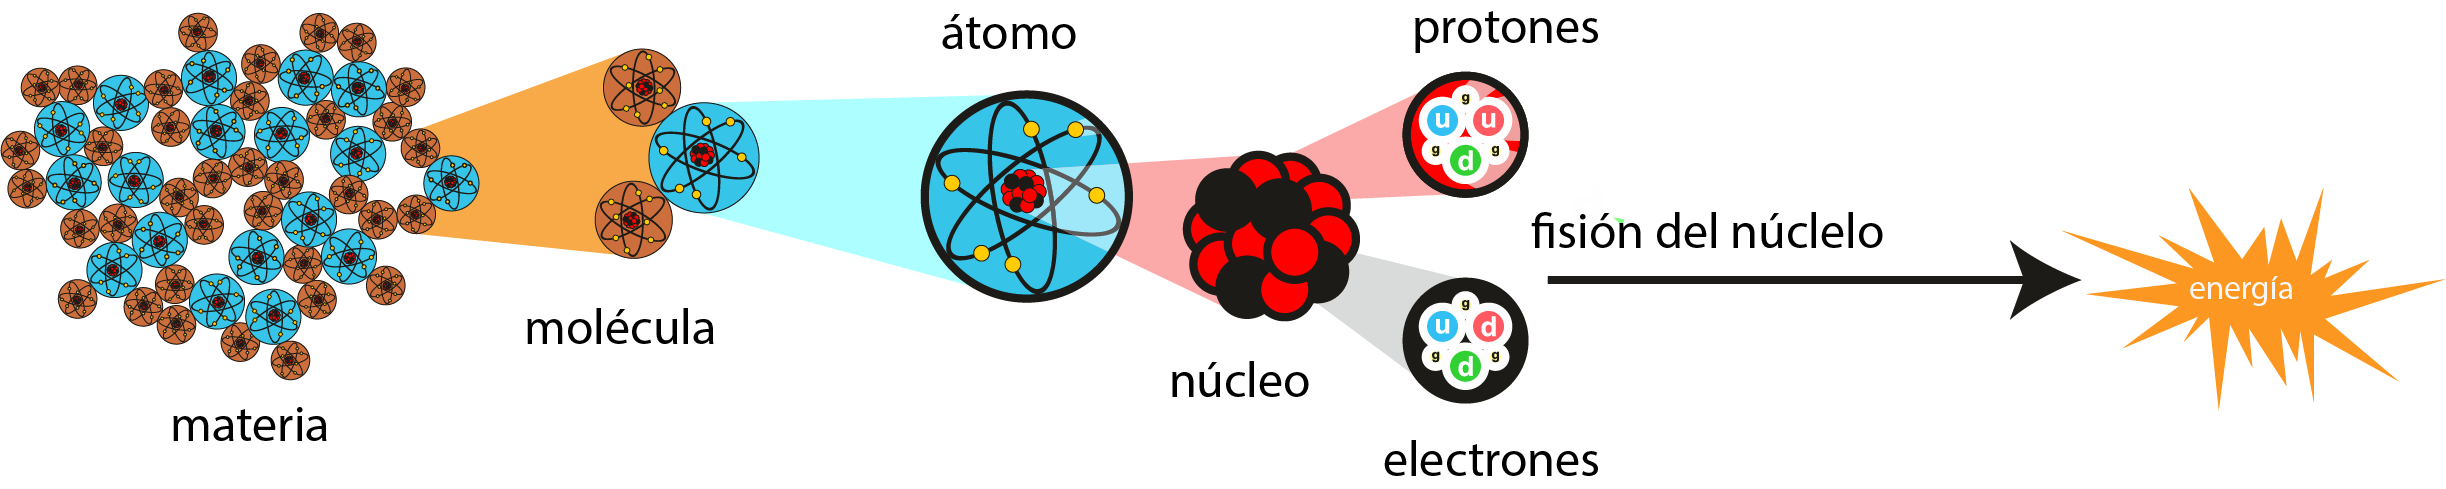 Representación gráfica de energía nuclear